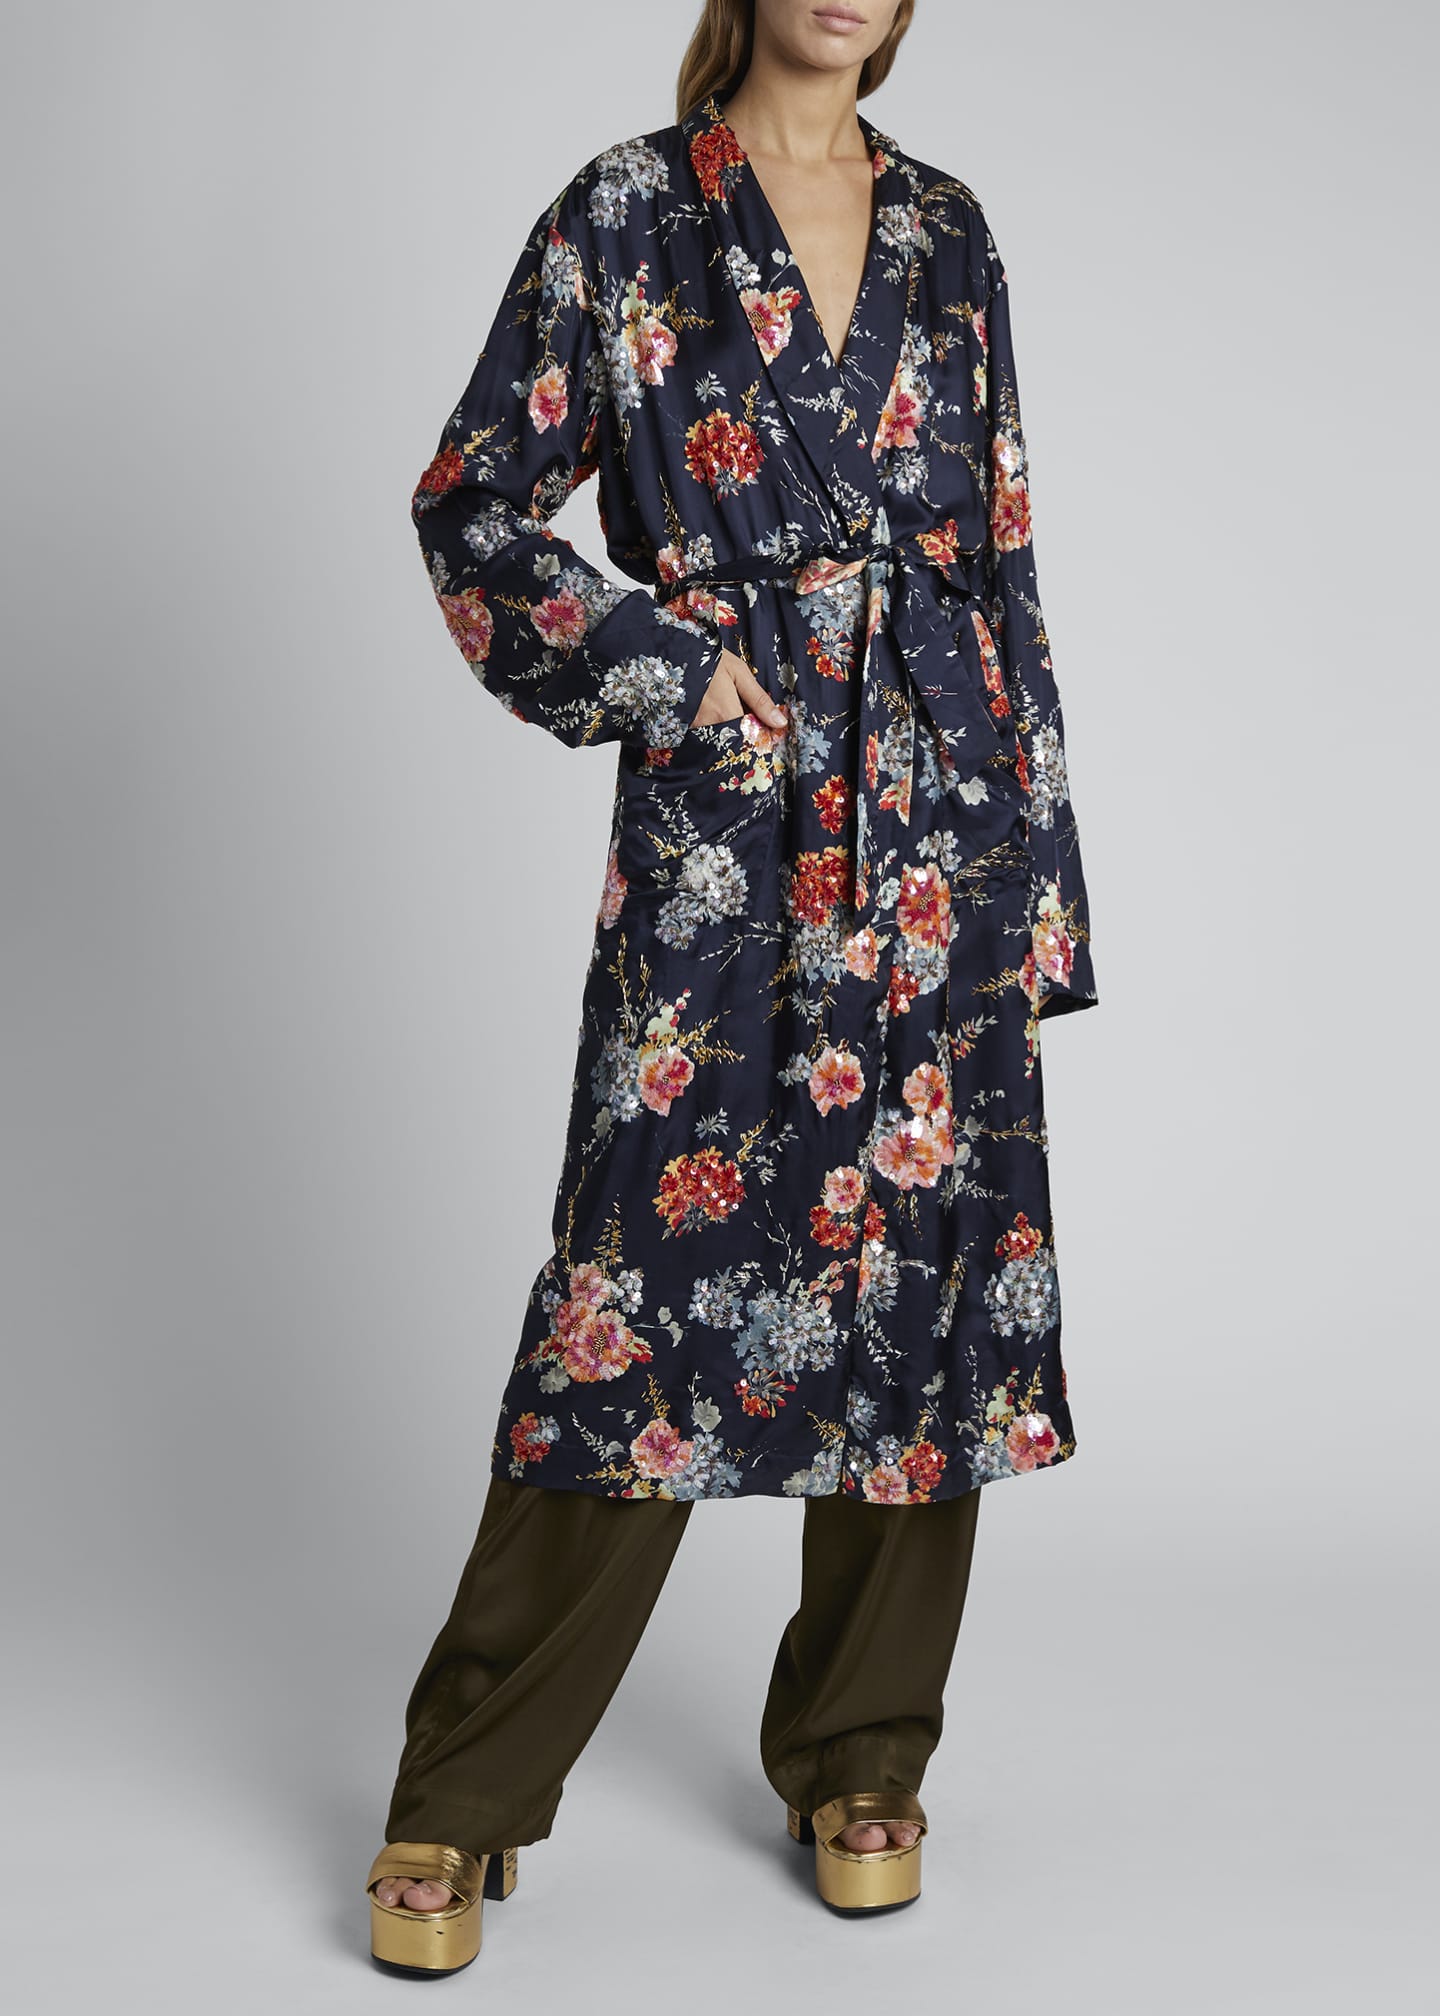 Dries Van Noten Charly Floral Tie-Front Robe Coat Image 1 of 3